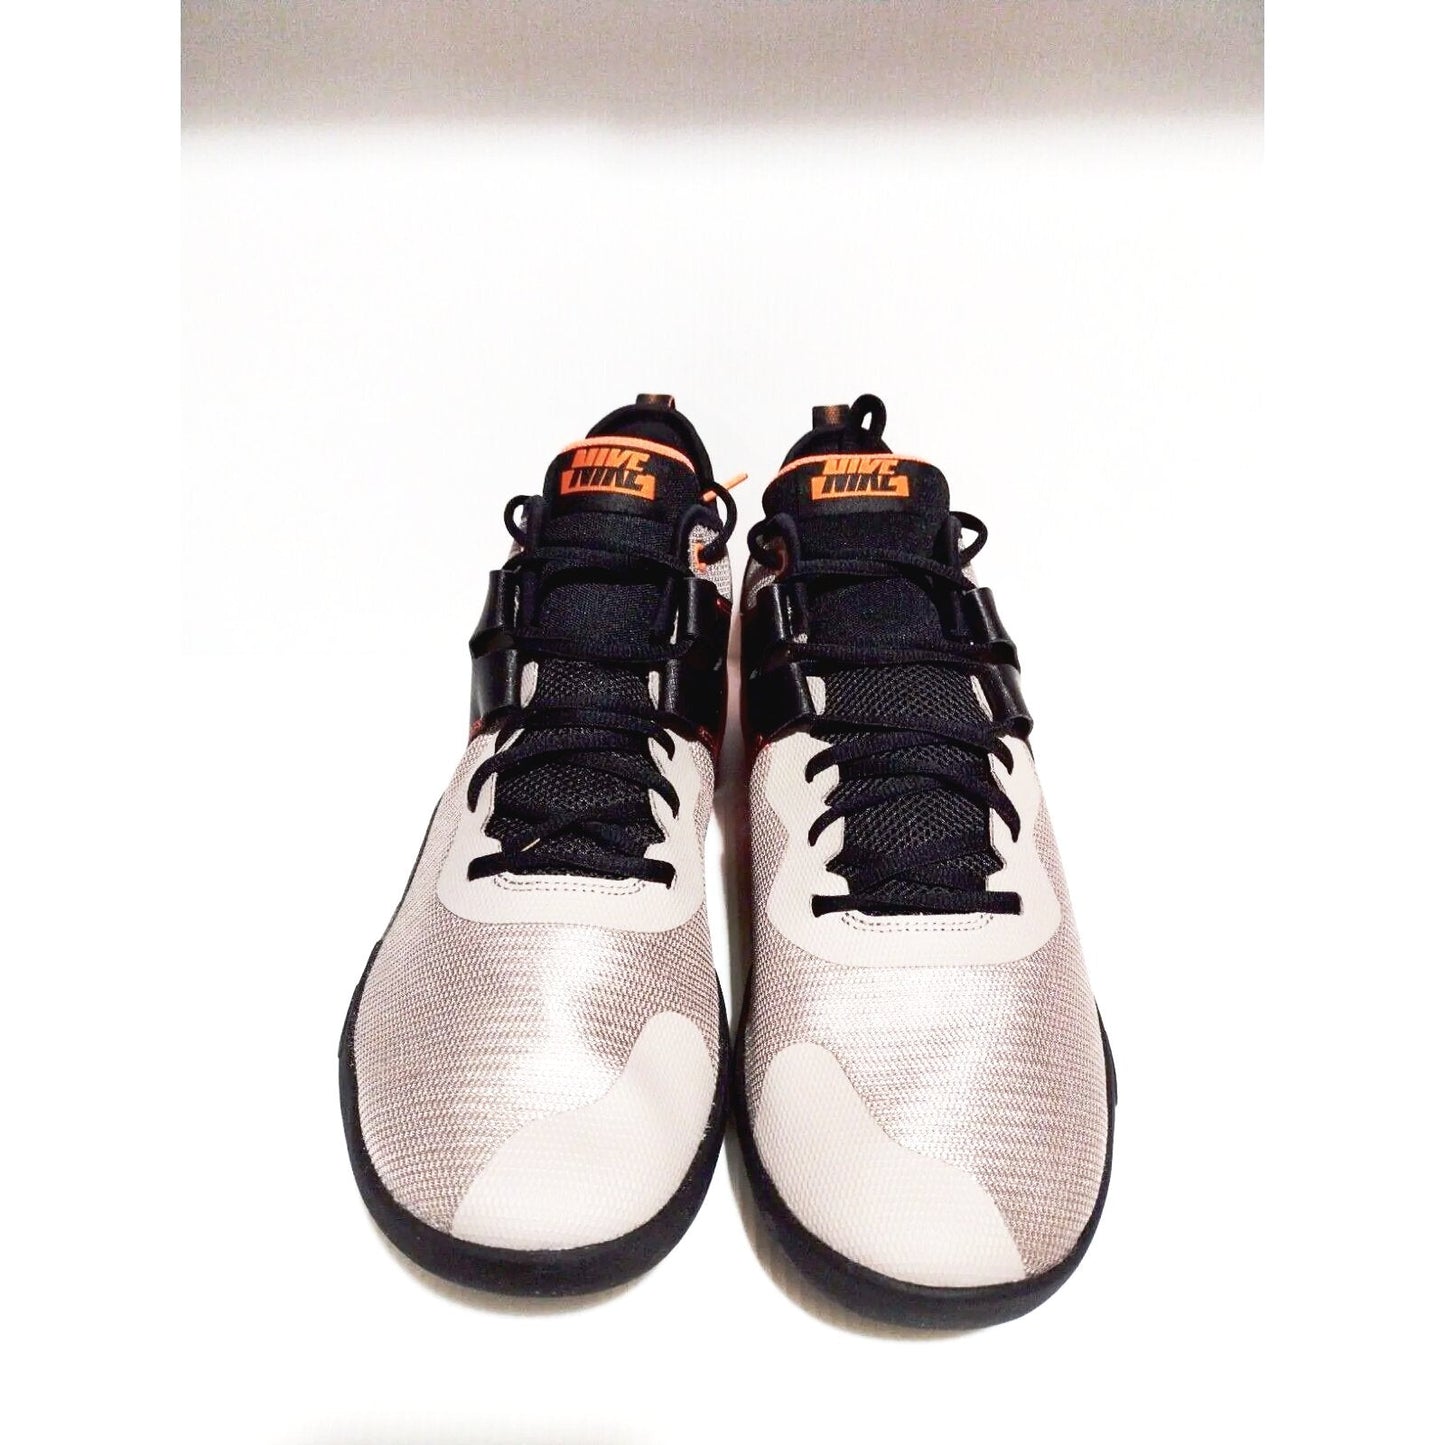 Nike air max impact basketball shoes size 11.5 us men - Classic Fashion Deals